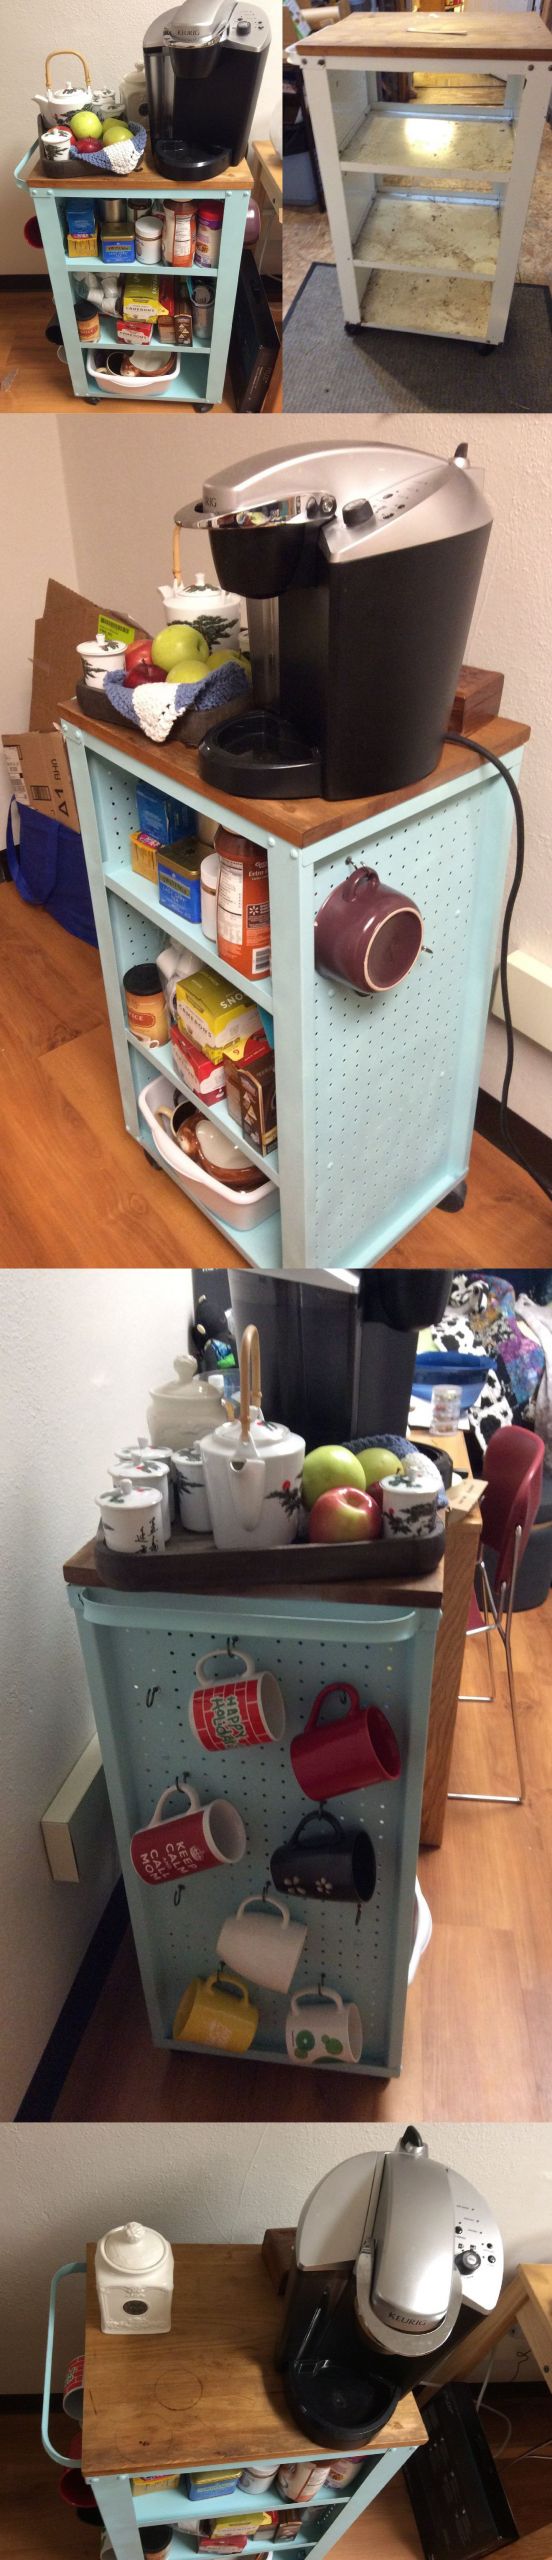 DIY Dorm Organization
 DIY Dorm room cart before and after kitchen cart mint